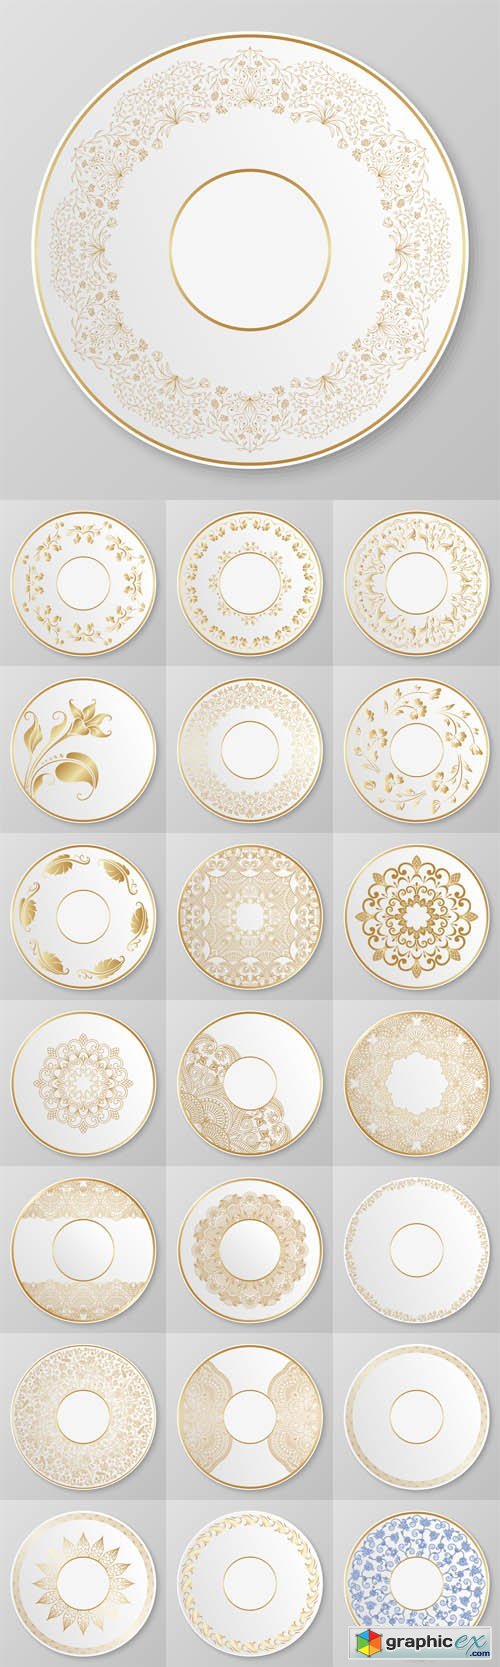 Gold Decorative Plates